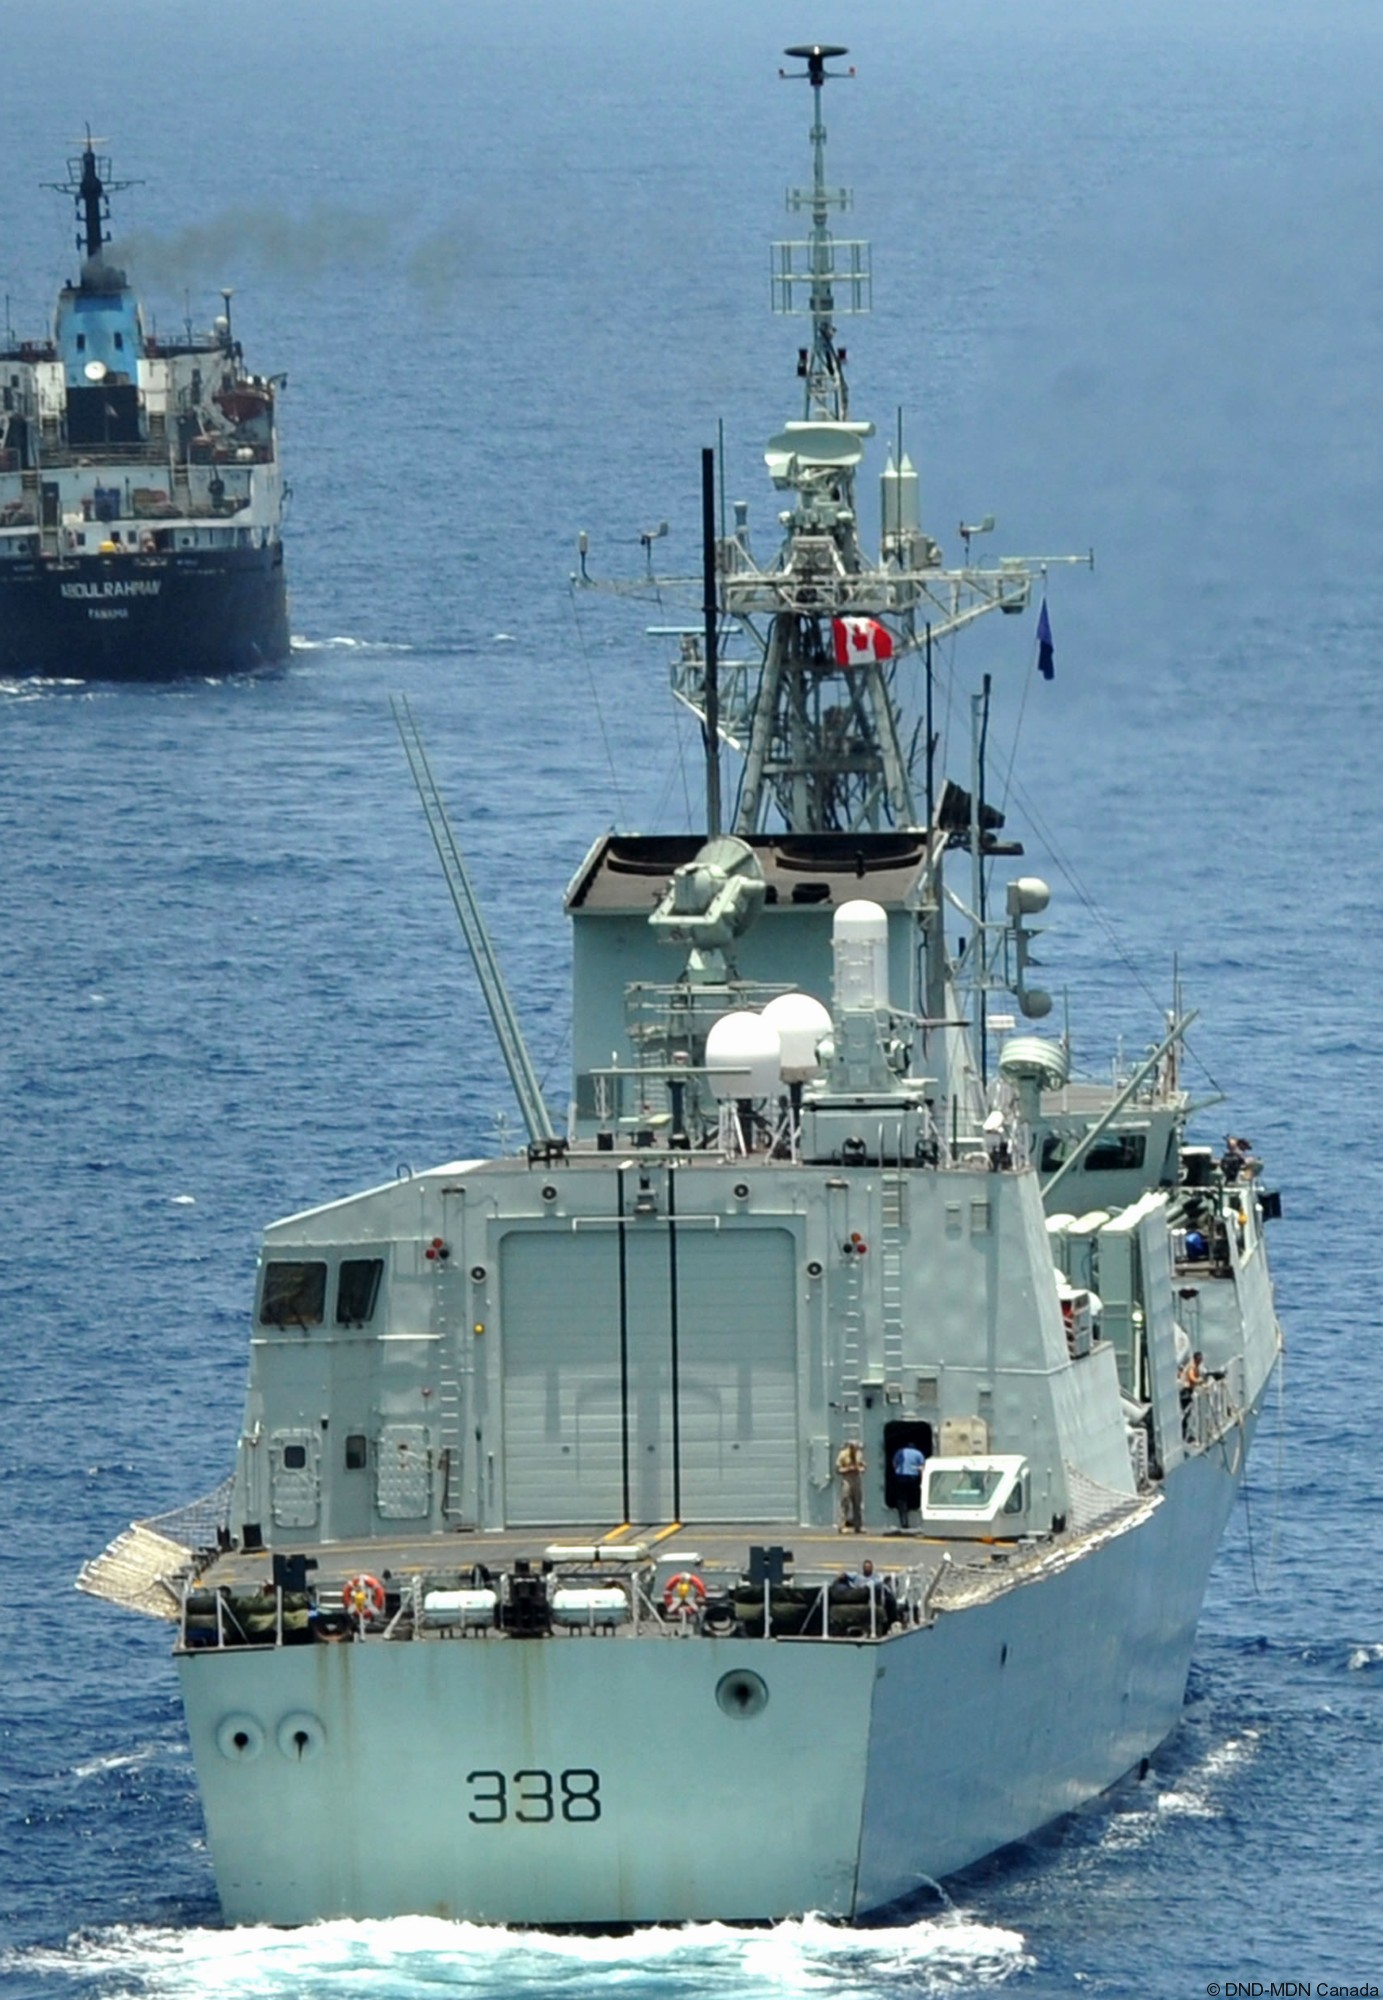 ffh-338 hmcs winnipeg halifax class helicopter patrol frigate ncsm royal canadian navy 11